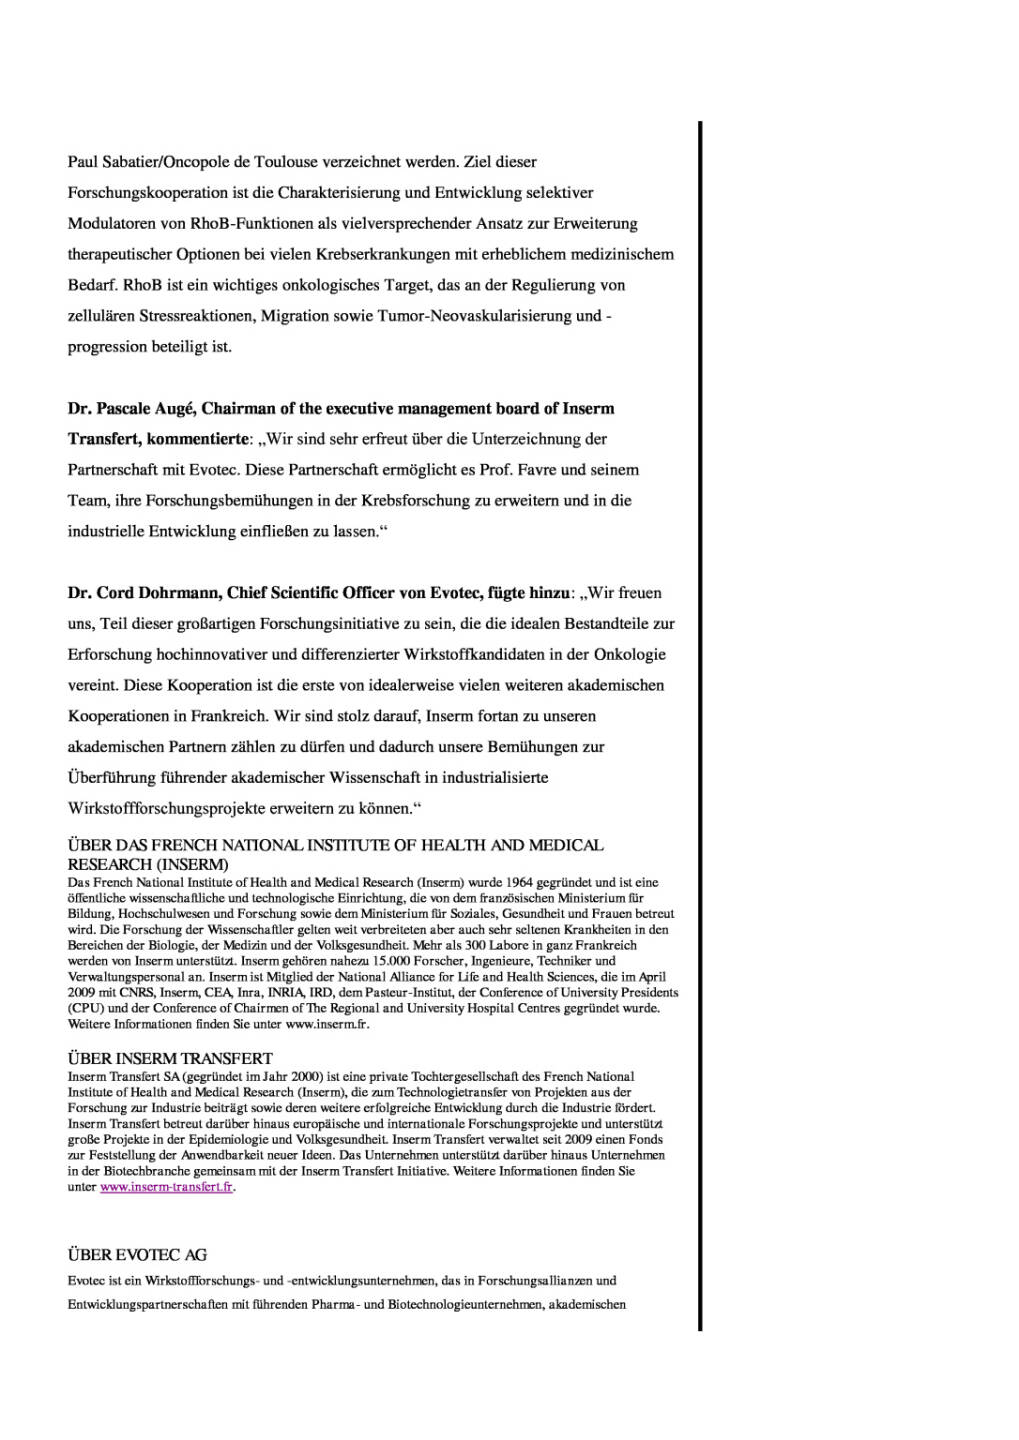 Evotec: Onkologie-Forschungs-Kooperation mit Inserm, Seite 2/3, komplettes Dokument unter http://boerse-social.com/static/uploads/file_1815_evotec_onkologie-forschungs-kooperation_mit_inserm.pdf